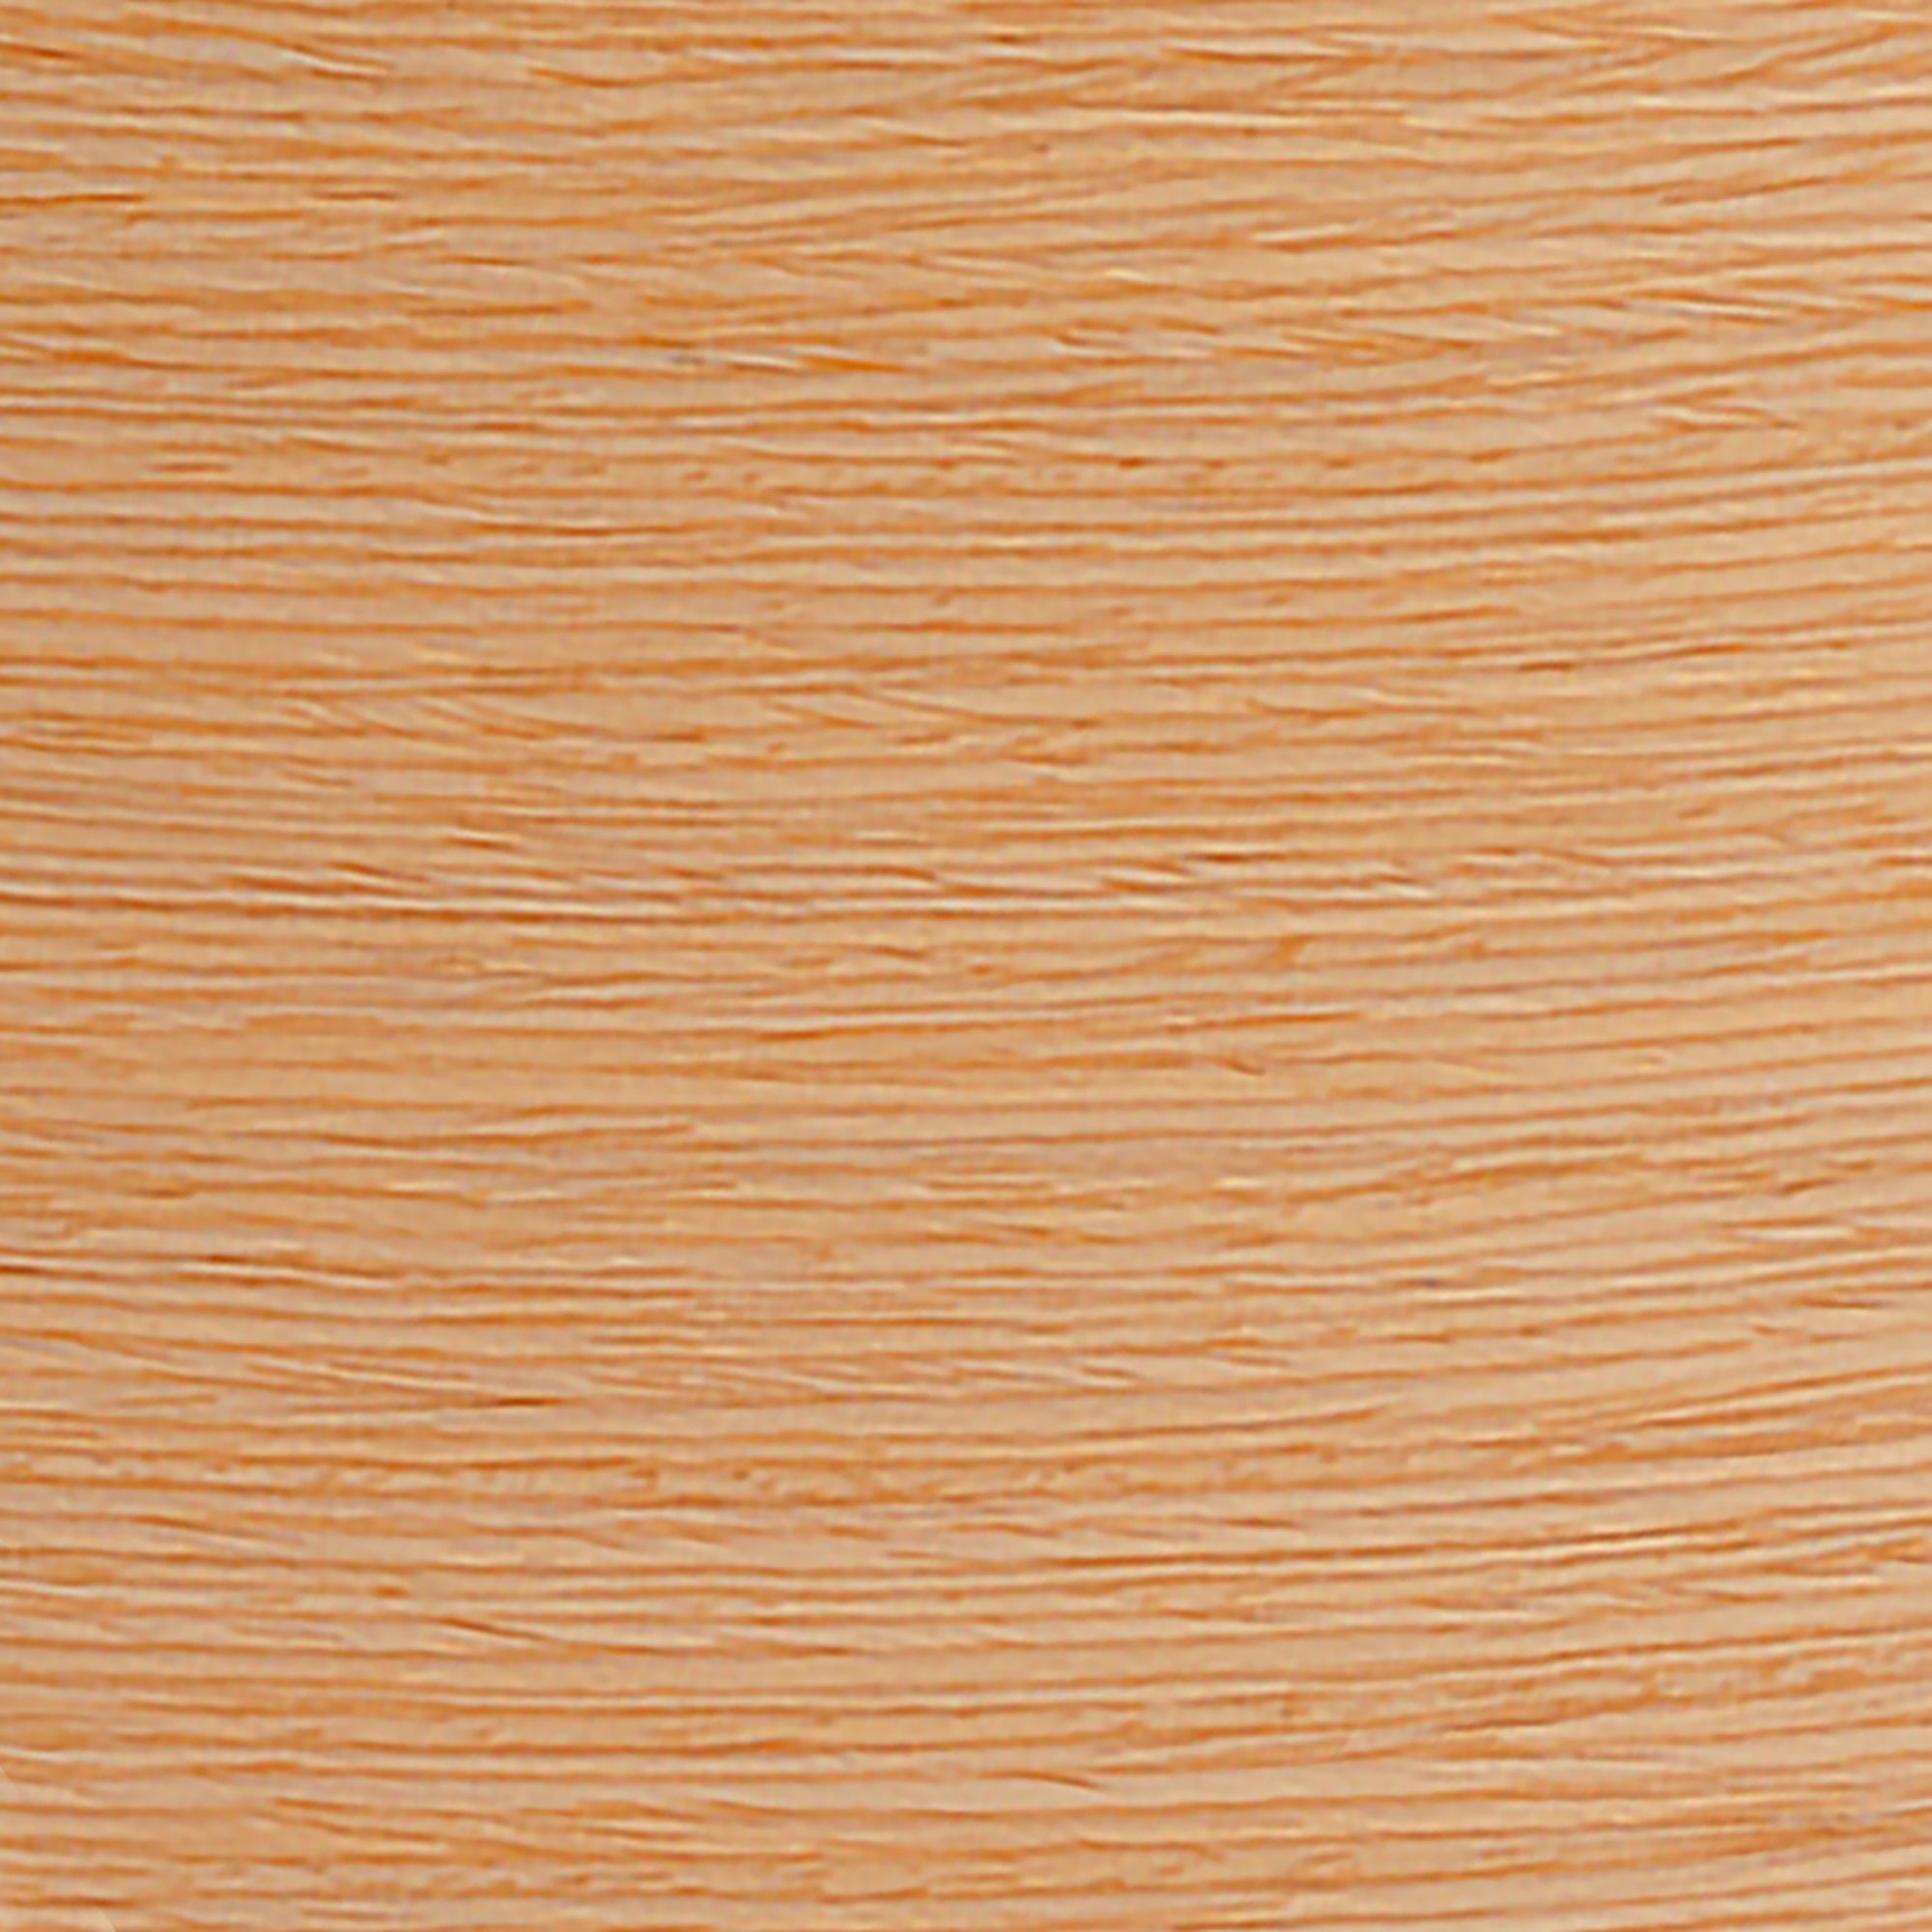 HALF BOWEN Mid-Century Modern White Oak Wood Veneer 30